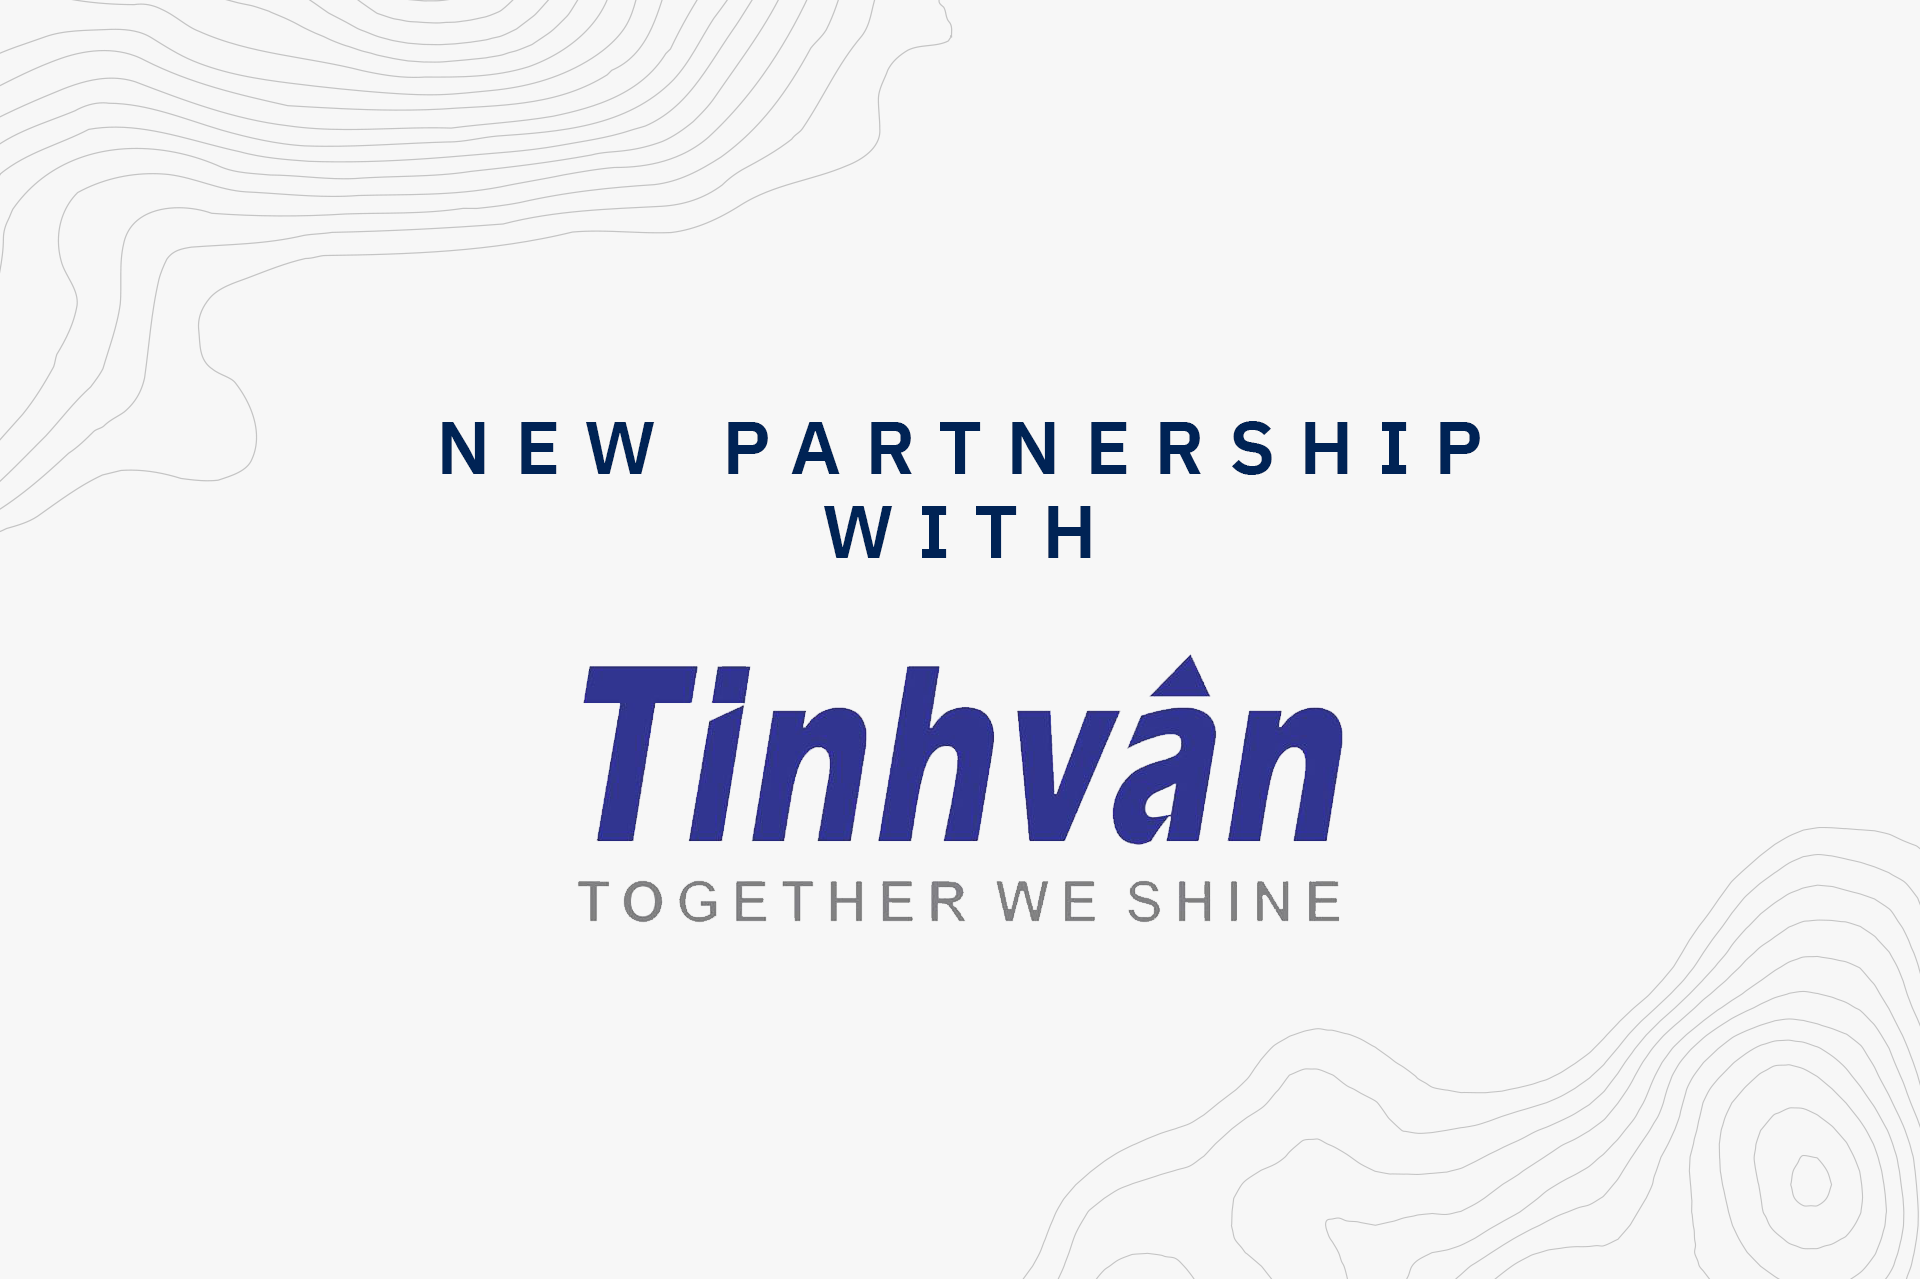 Contour and Tinhvan partner to drive digitisation of trade finance in Vietnam